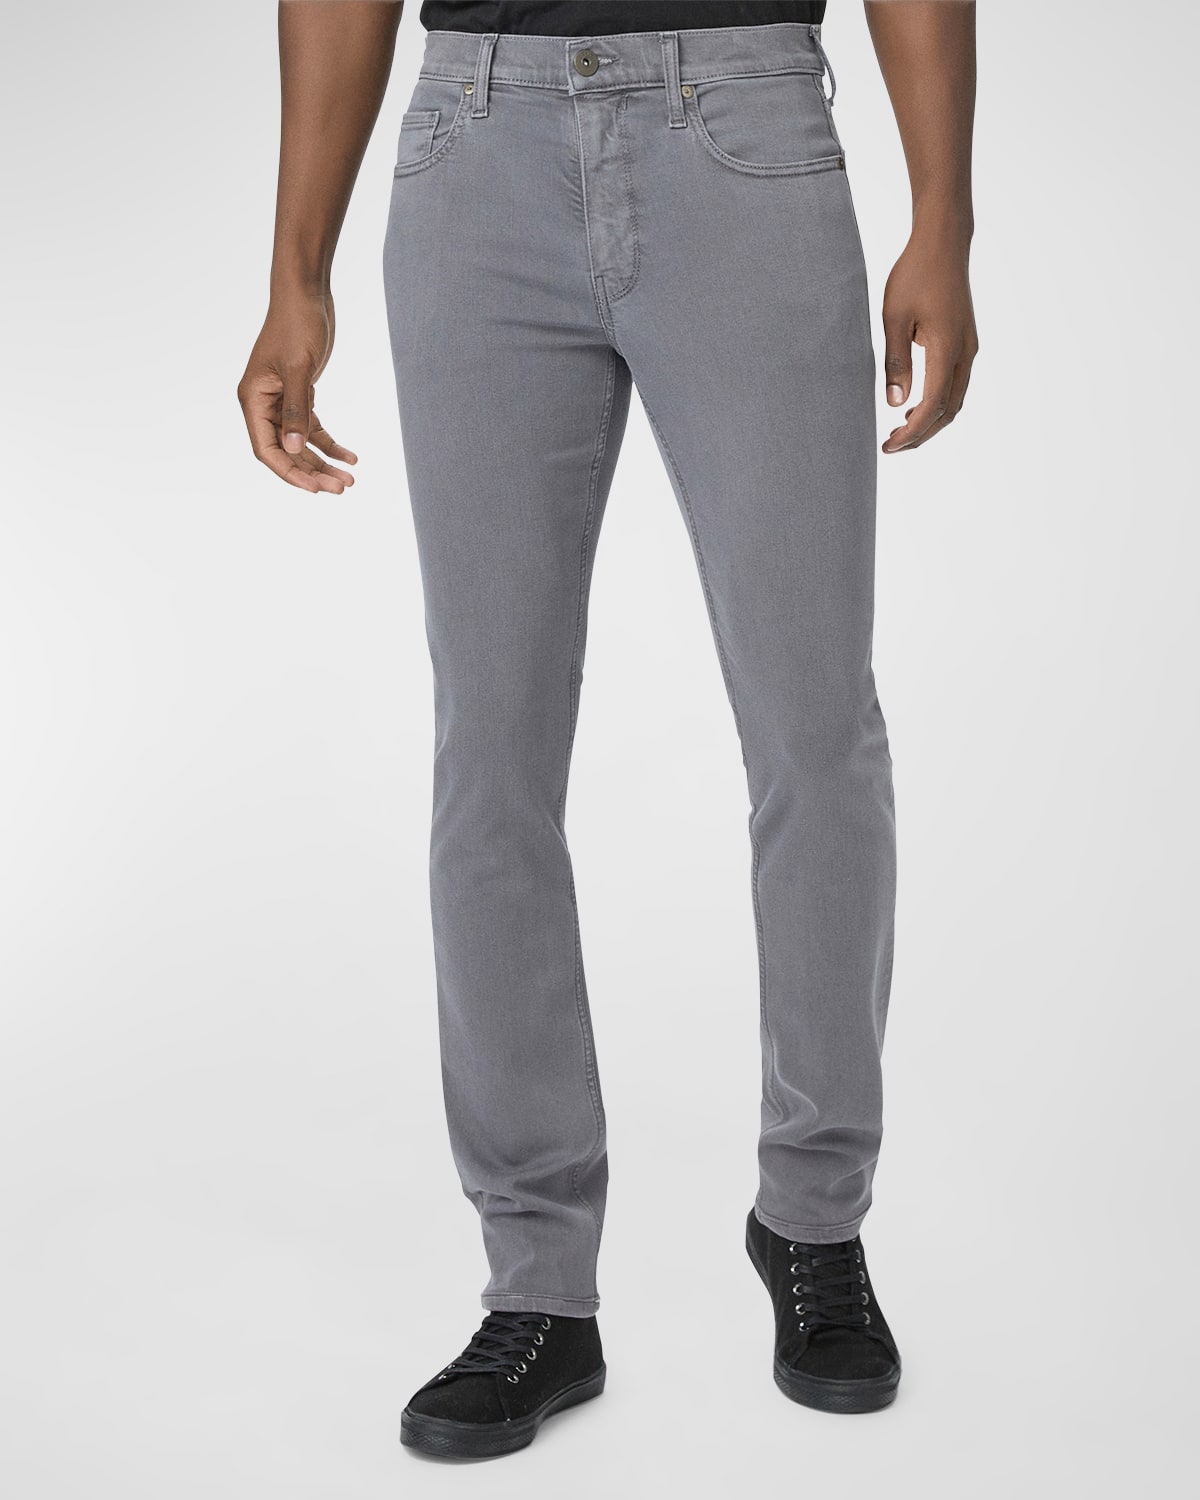 Men's Lennox Slim-Fit Jeans